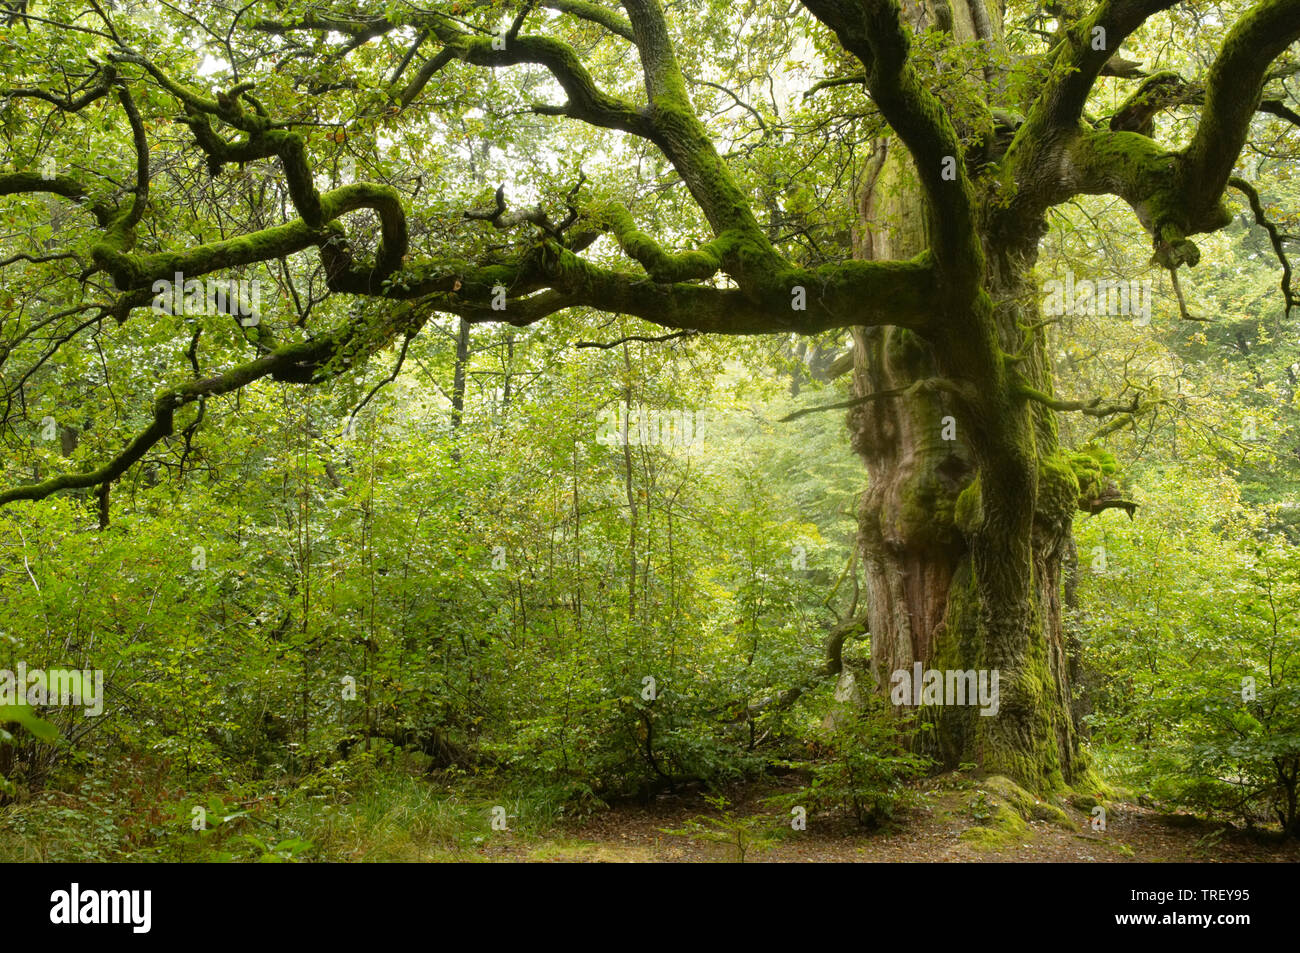 Pendulate Oak, English Oak (Quercus robur). Ancient Oak tree in old forest. Stock Photo